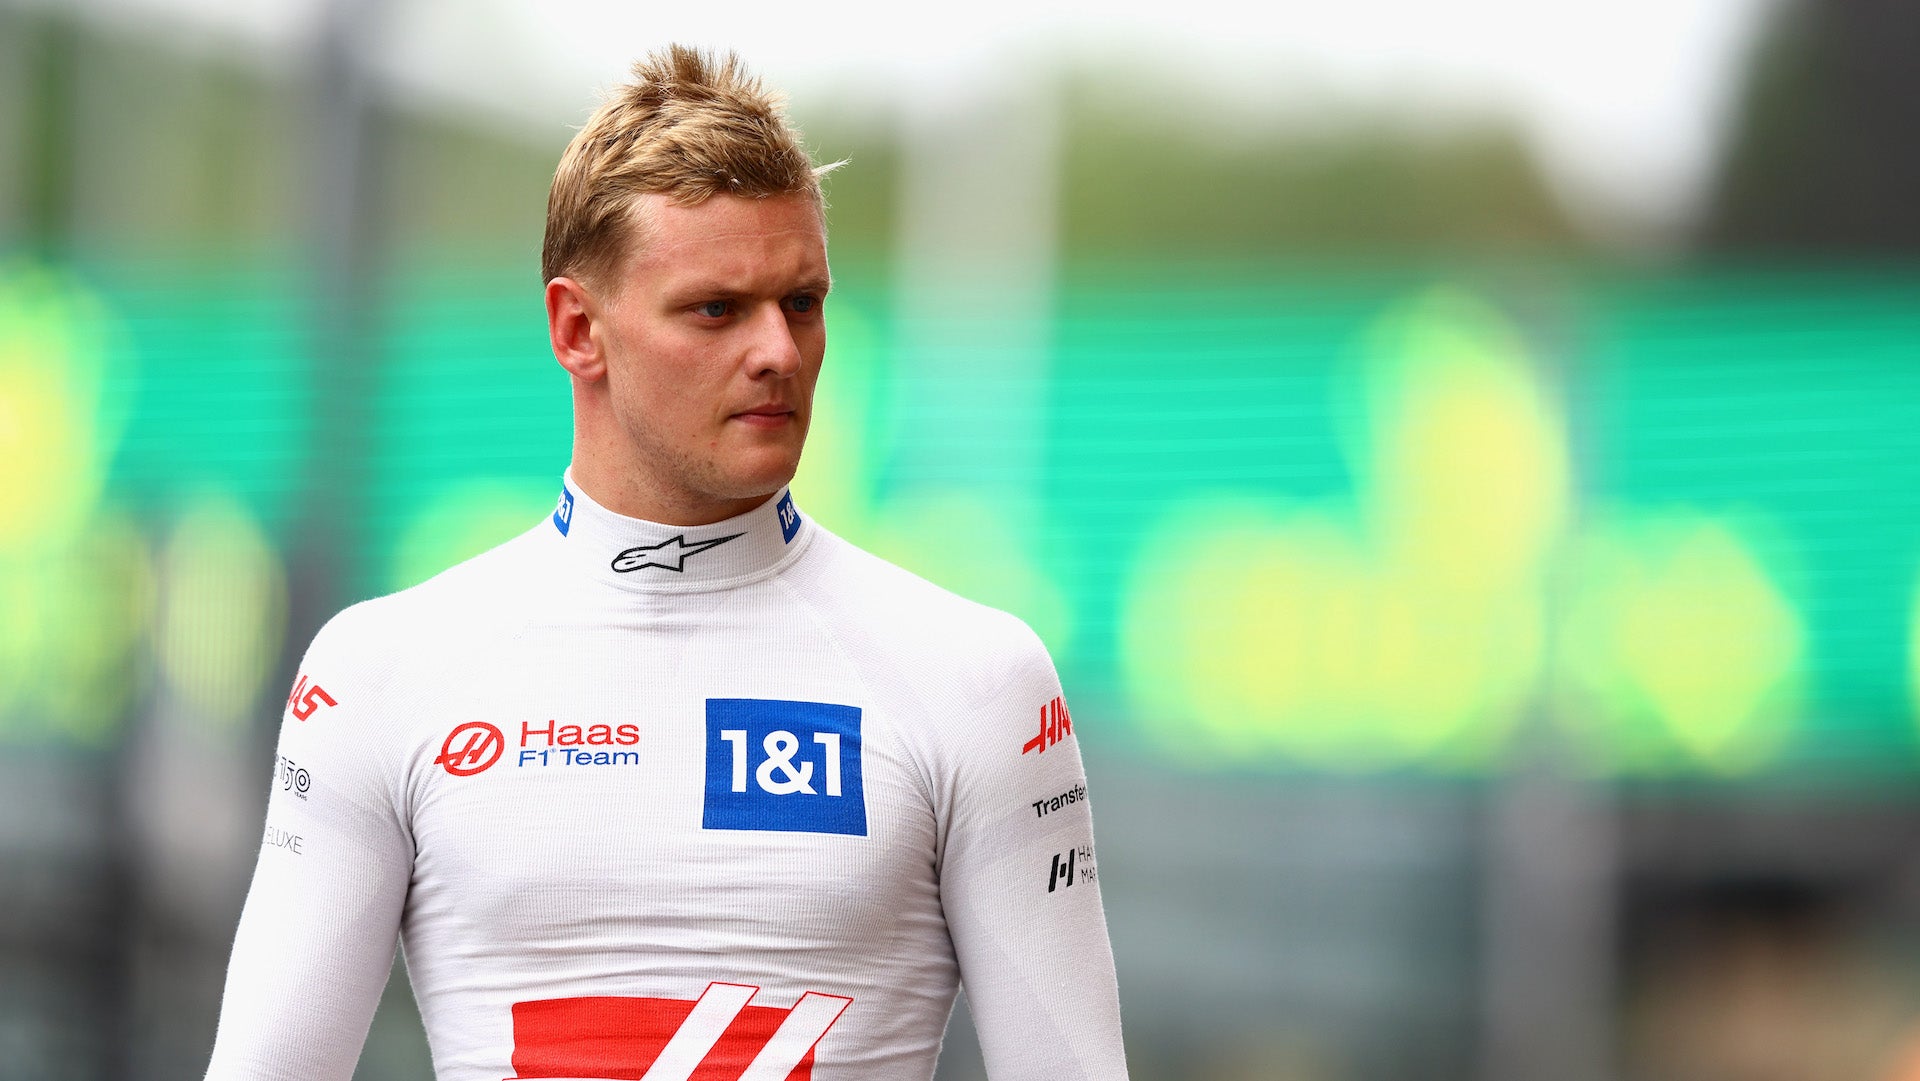 Mick Schumacher’s F1 Future Looks Bleak Amid Haas Departure